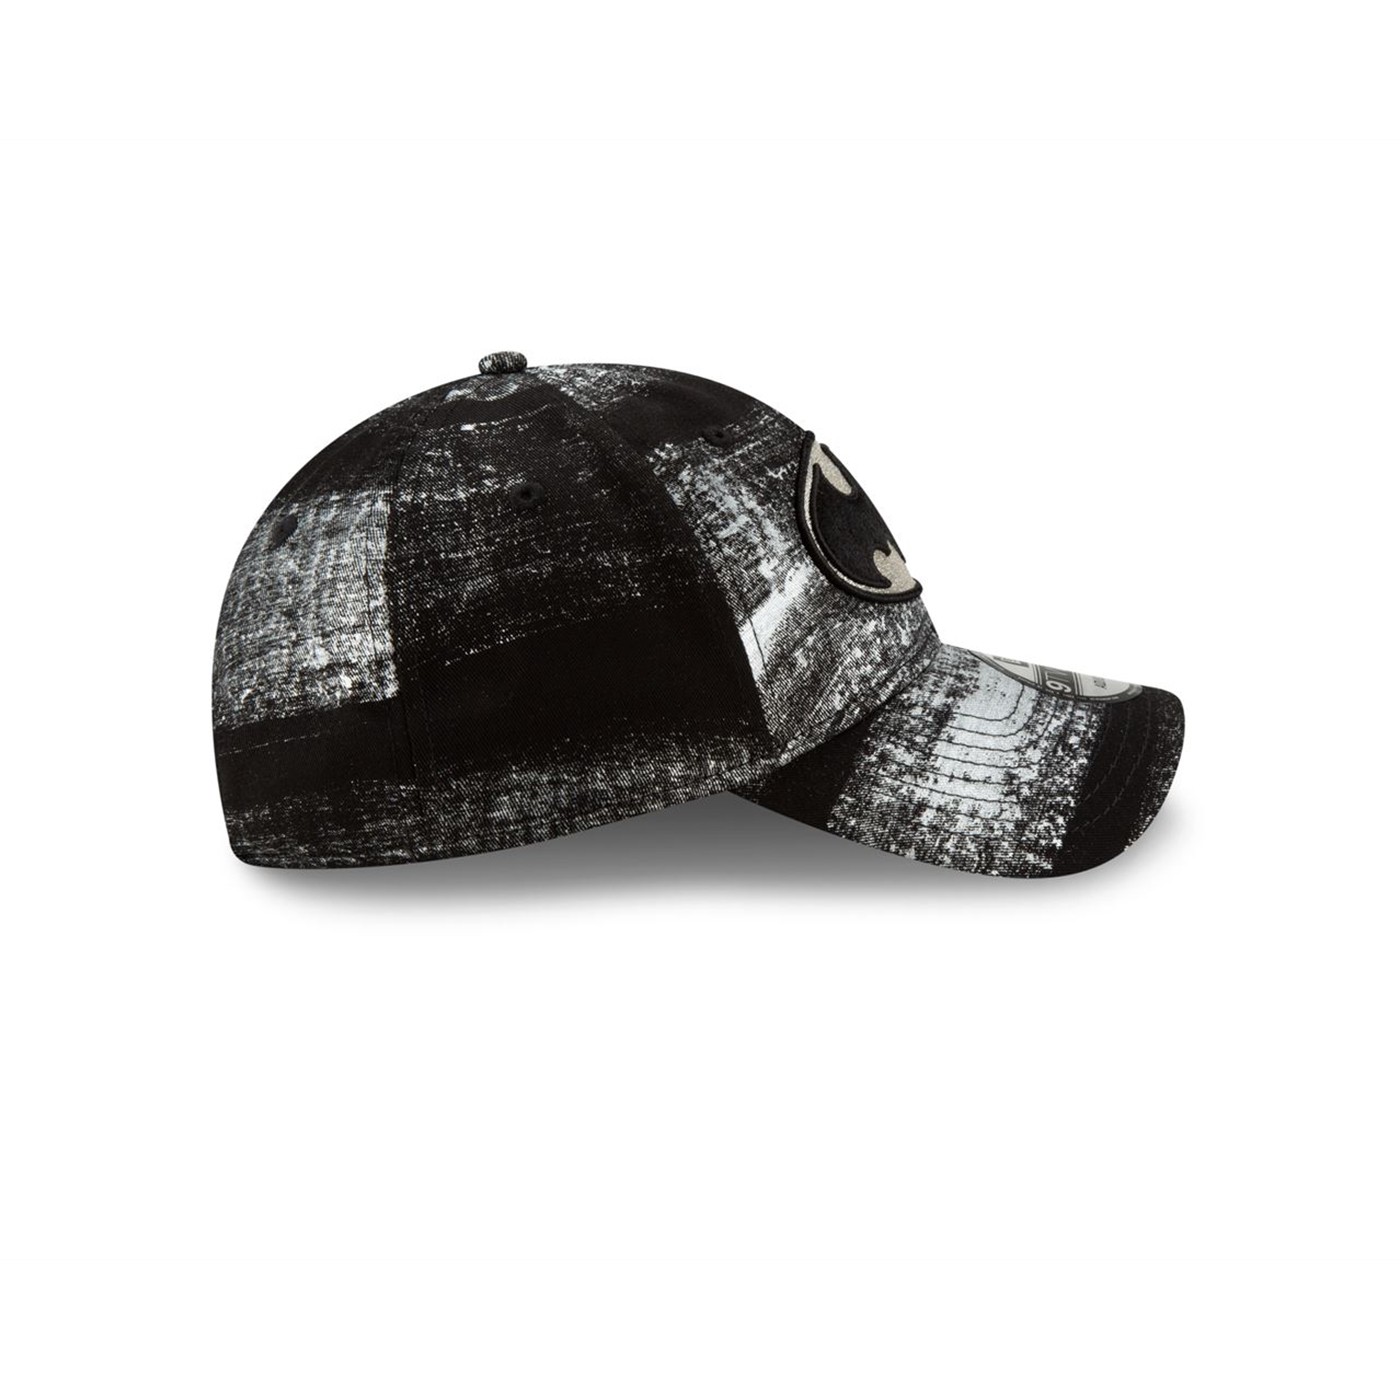 Batman Shades of Black New Era 9Twenty Adjustable Hat